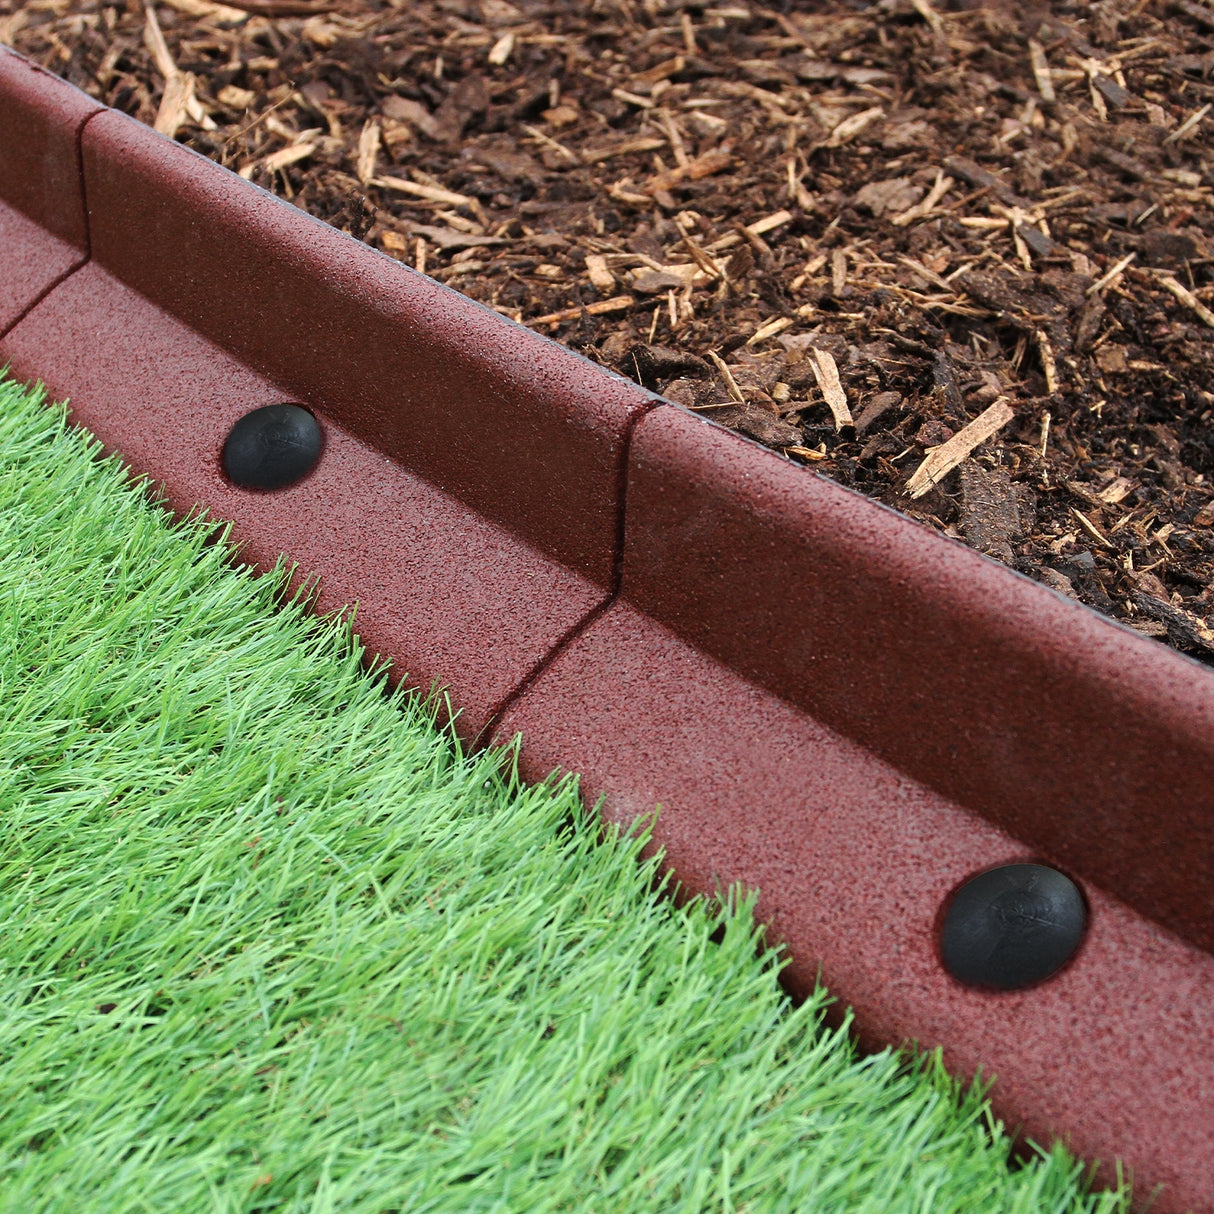 Flexible Lawn Edging Terracotta 1.2m x 24